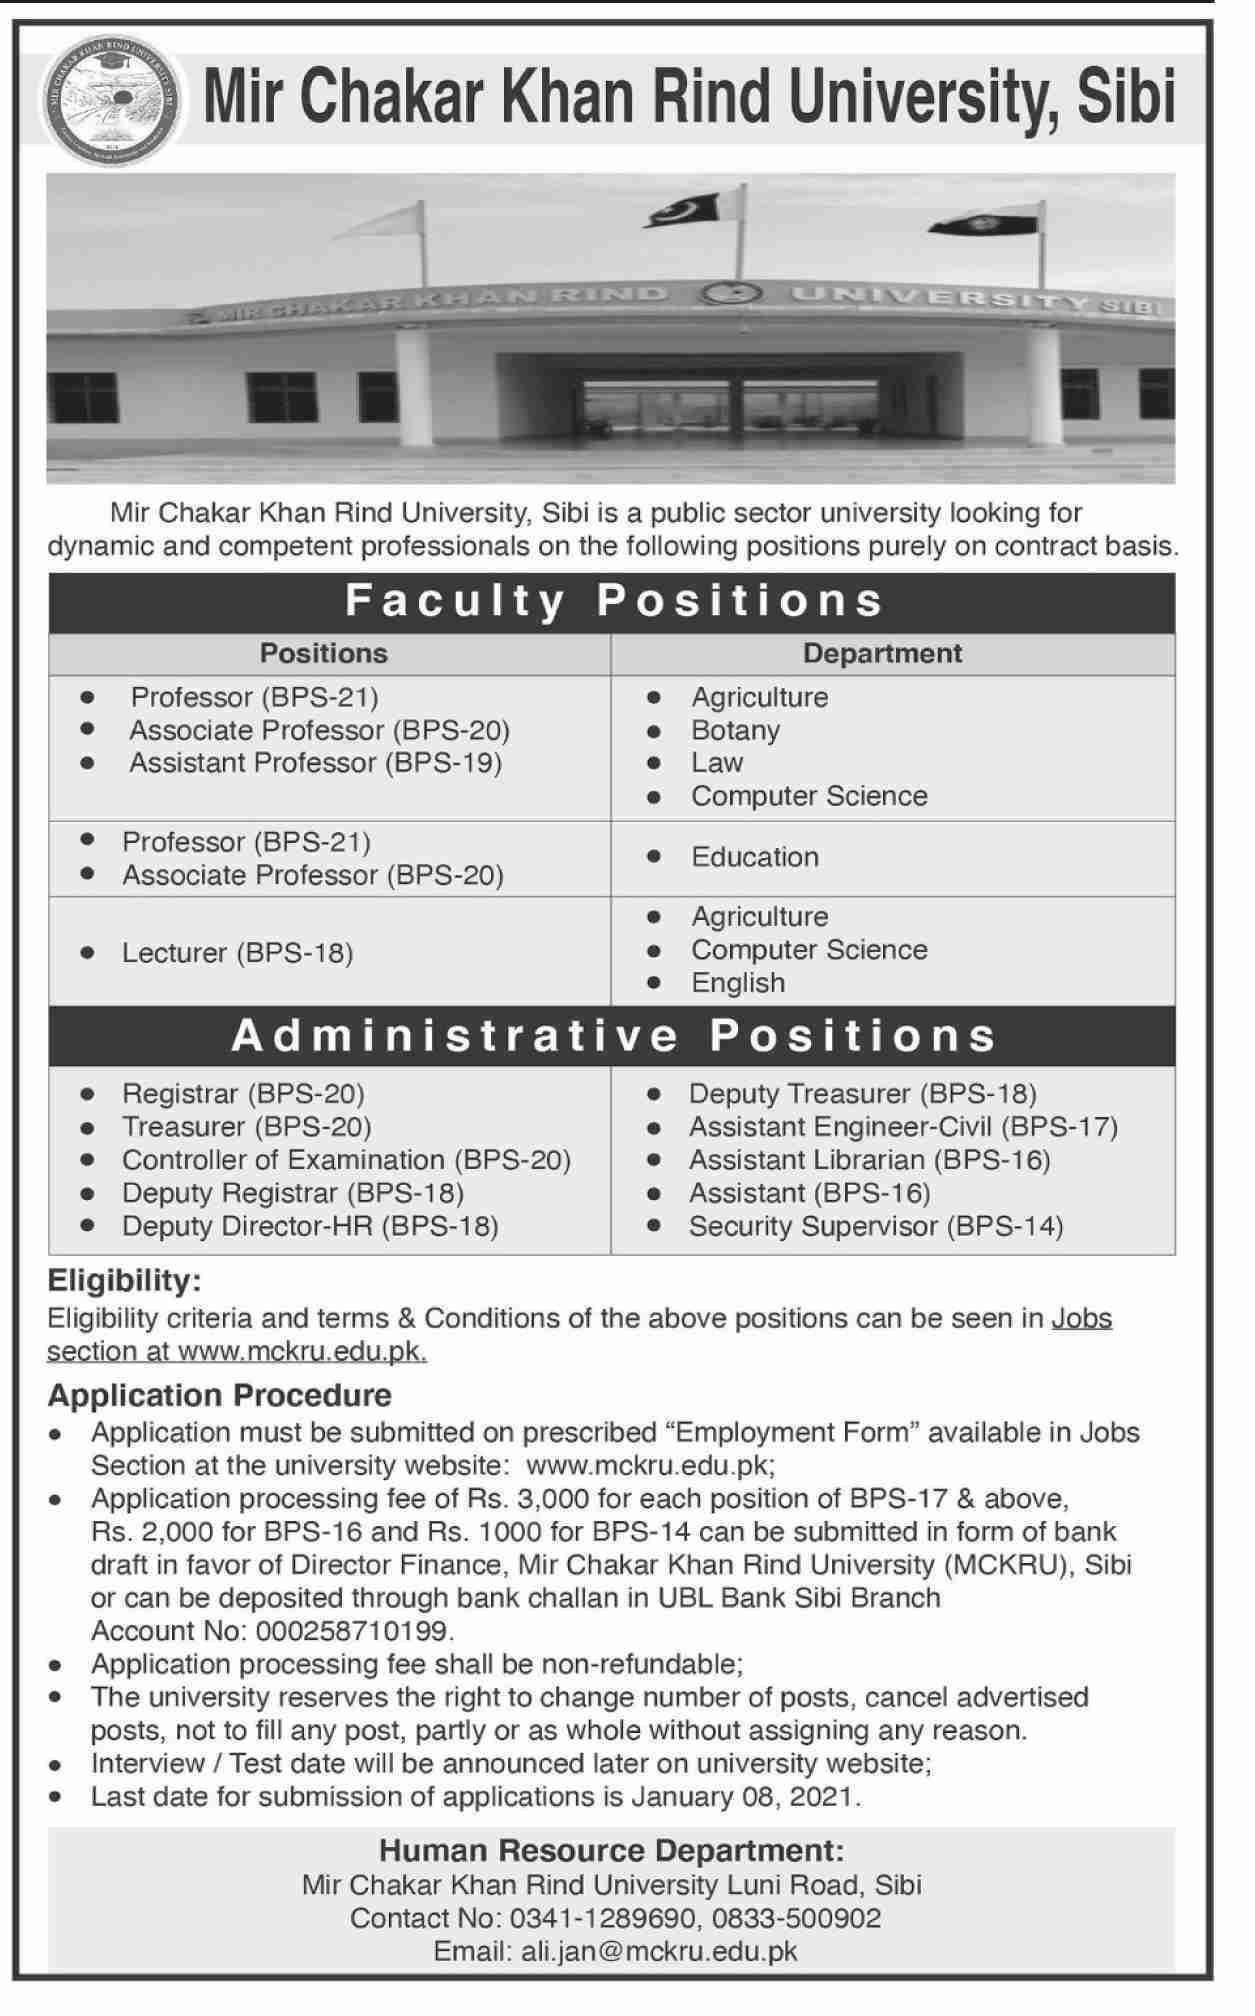 MIR Chakar Khan Rind University Jobs 2021 Latest